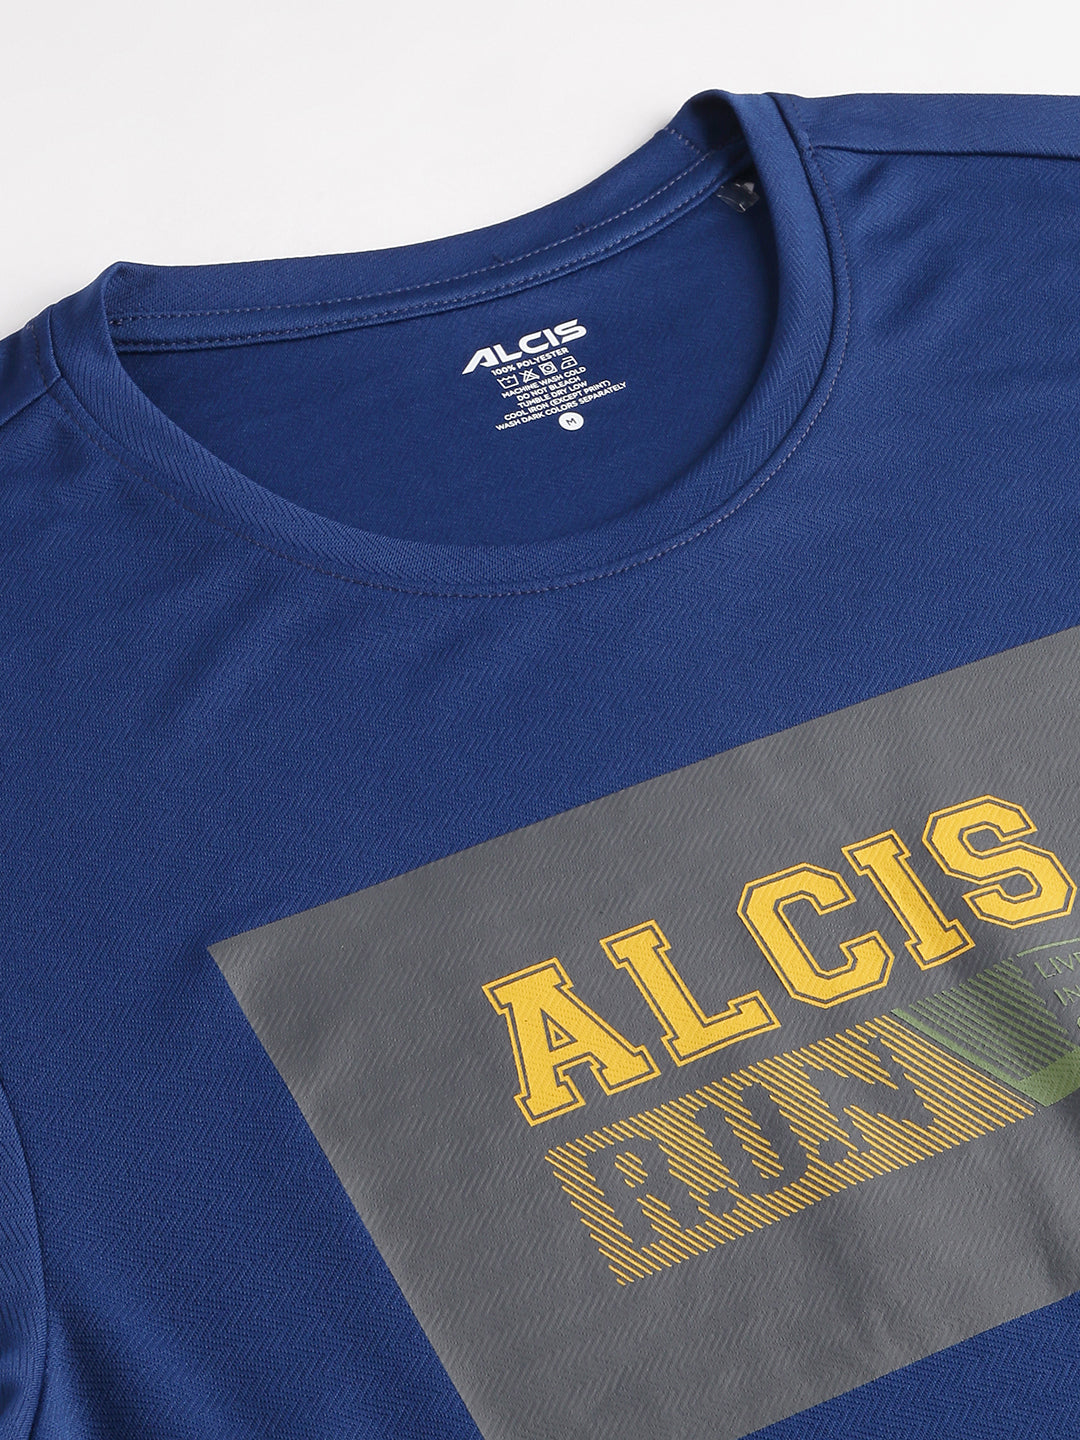 Alcis Men's Printed Navy Anti-Static Drytech+ Slim-Fit Training Tee